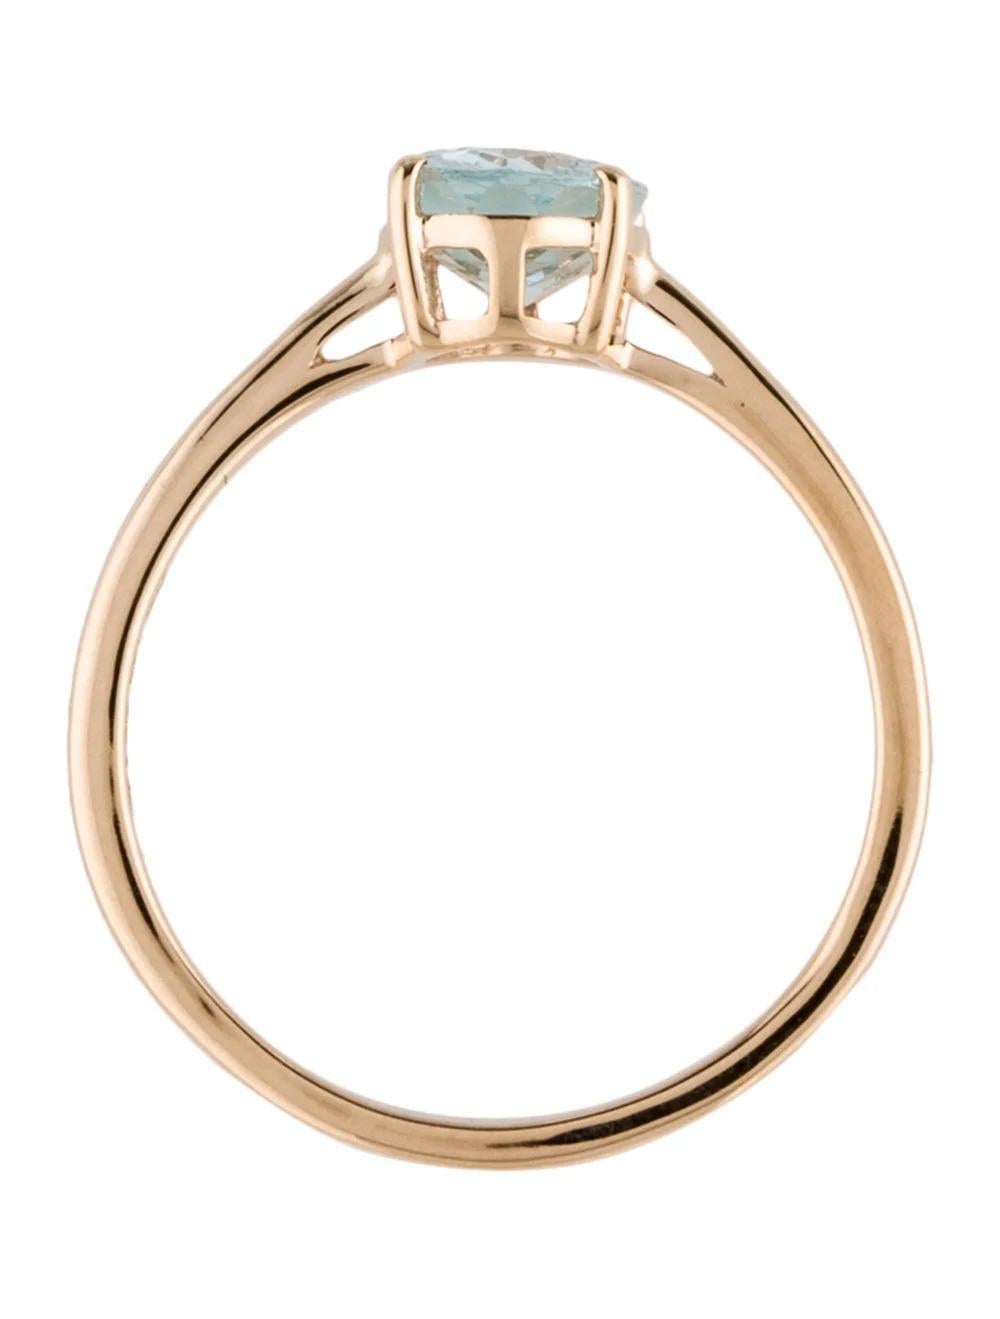 Women's 14K 1.00ct Aquamarine Cocktail Ring Size 6.75 - Blue Gemstone, Statement Jewelry For Sale